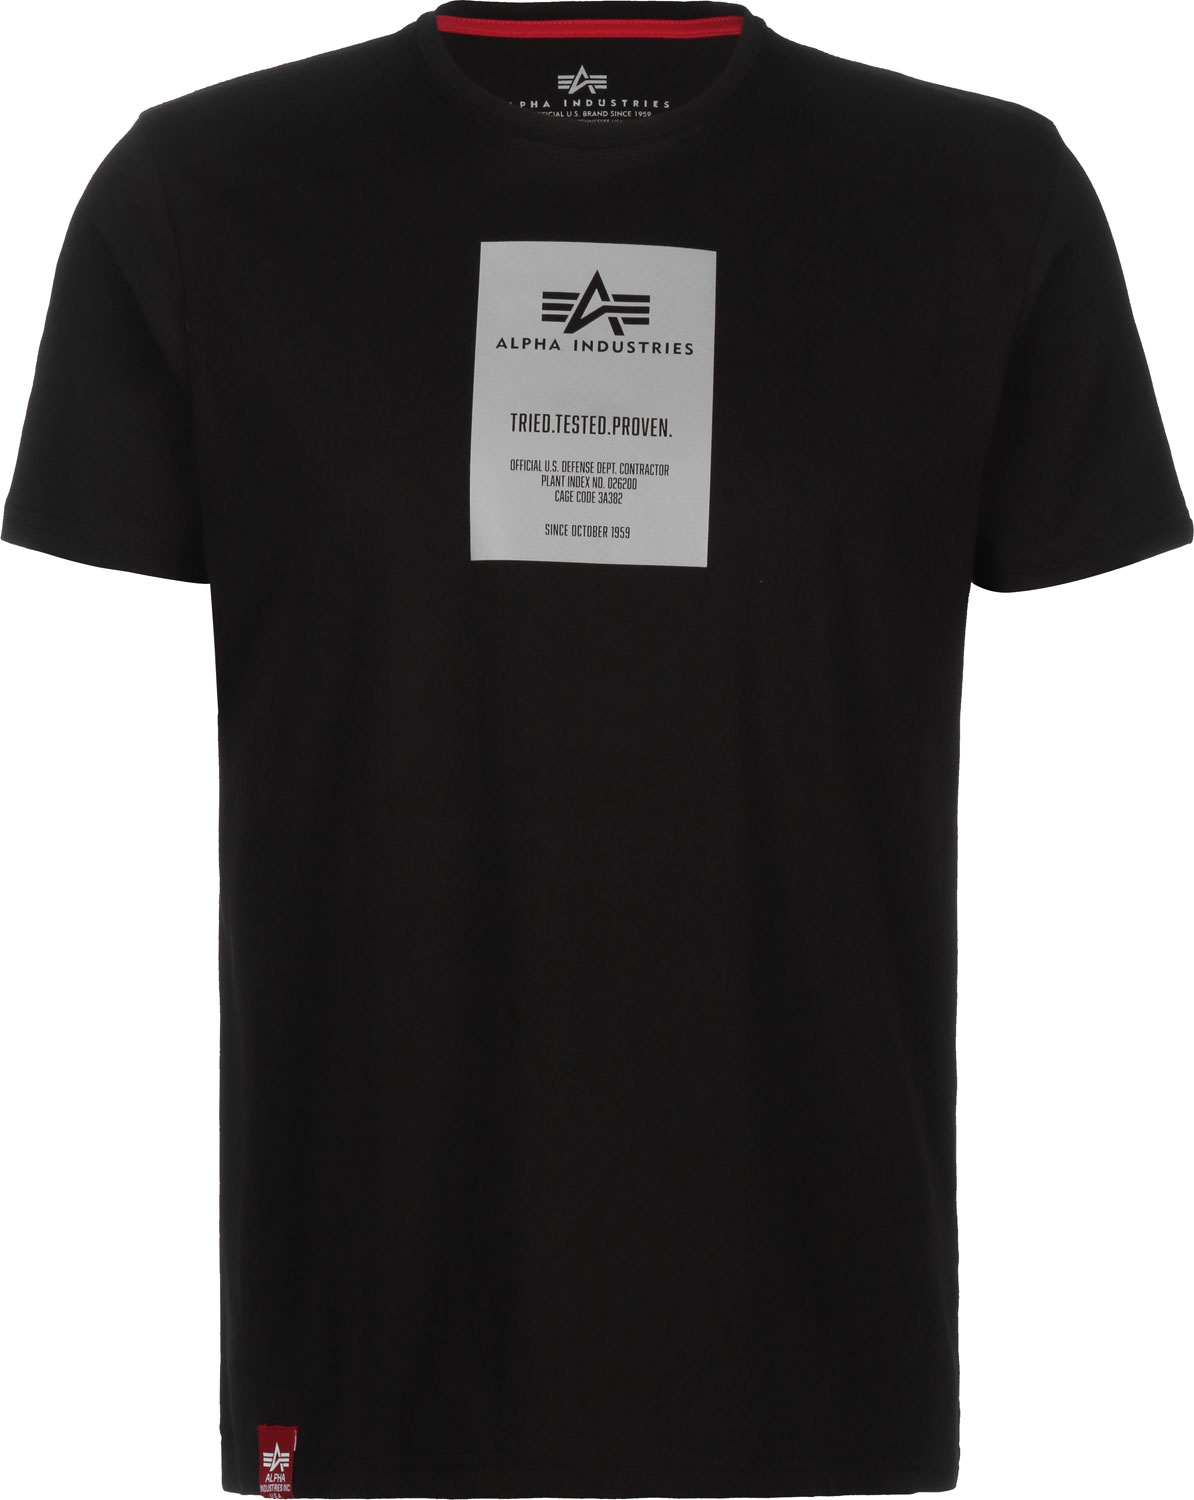 Black - The Industries (126515/09) Reflective - Alpha Label T-Shirt 515